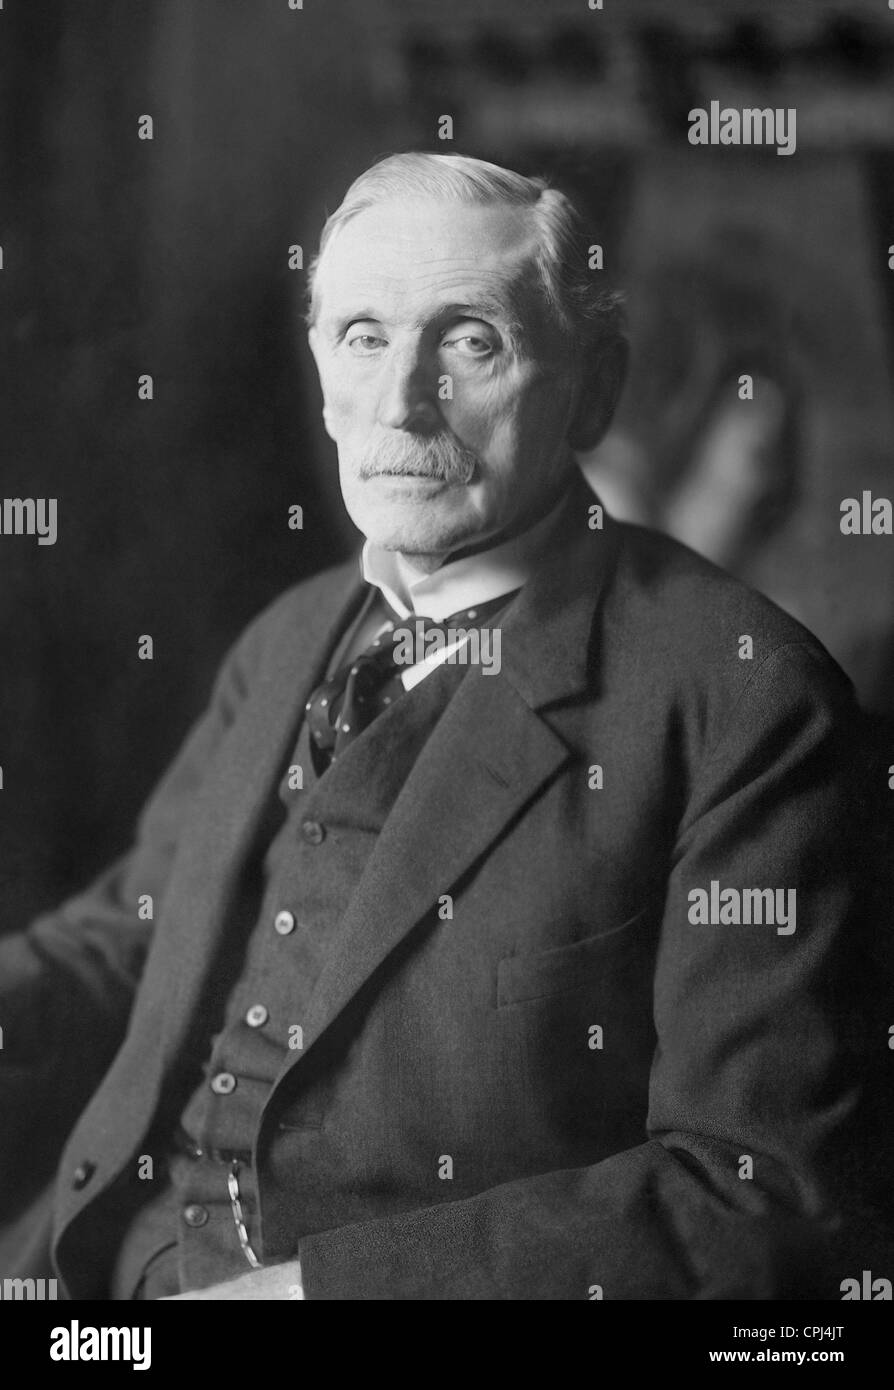 Wilhelm von bode Imágenes de stock en blanco y negro - Alamy